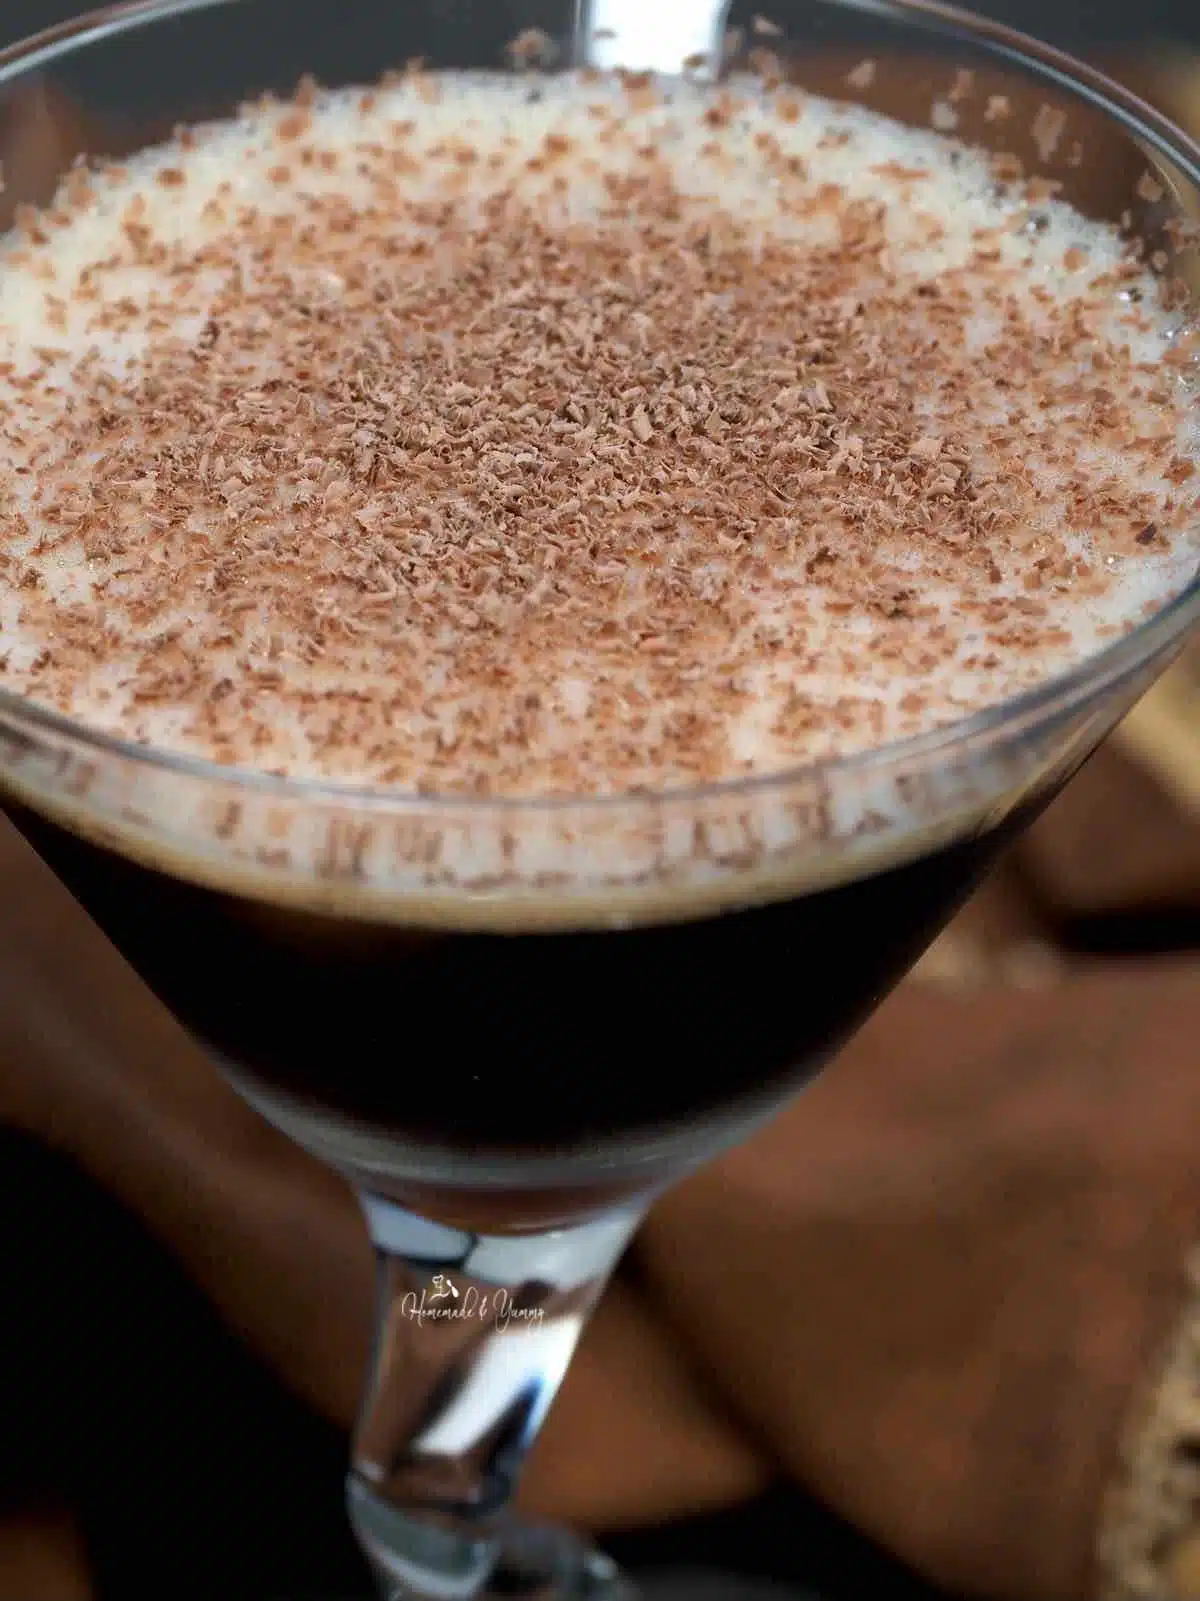 Simple coffee and chocolate martini recipe.